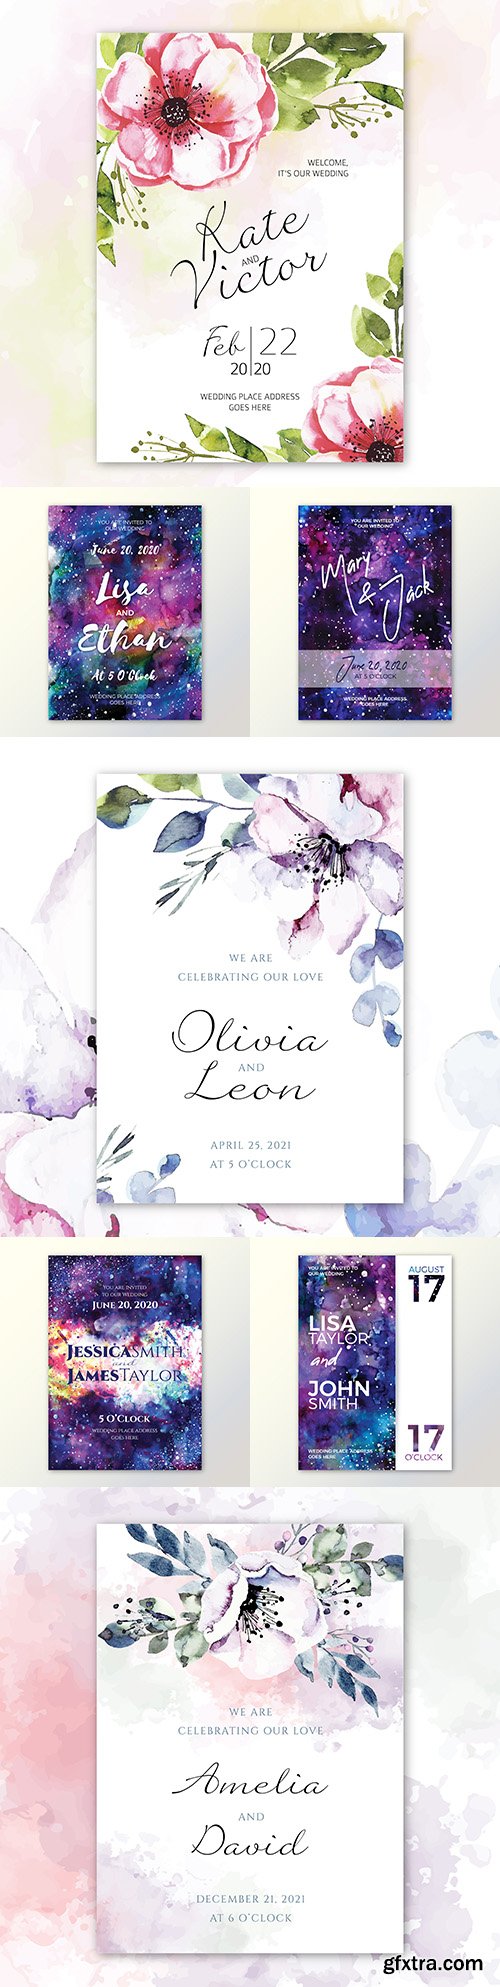 Galaxy and decorative flowers invitation wedding watercolor